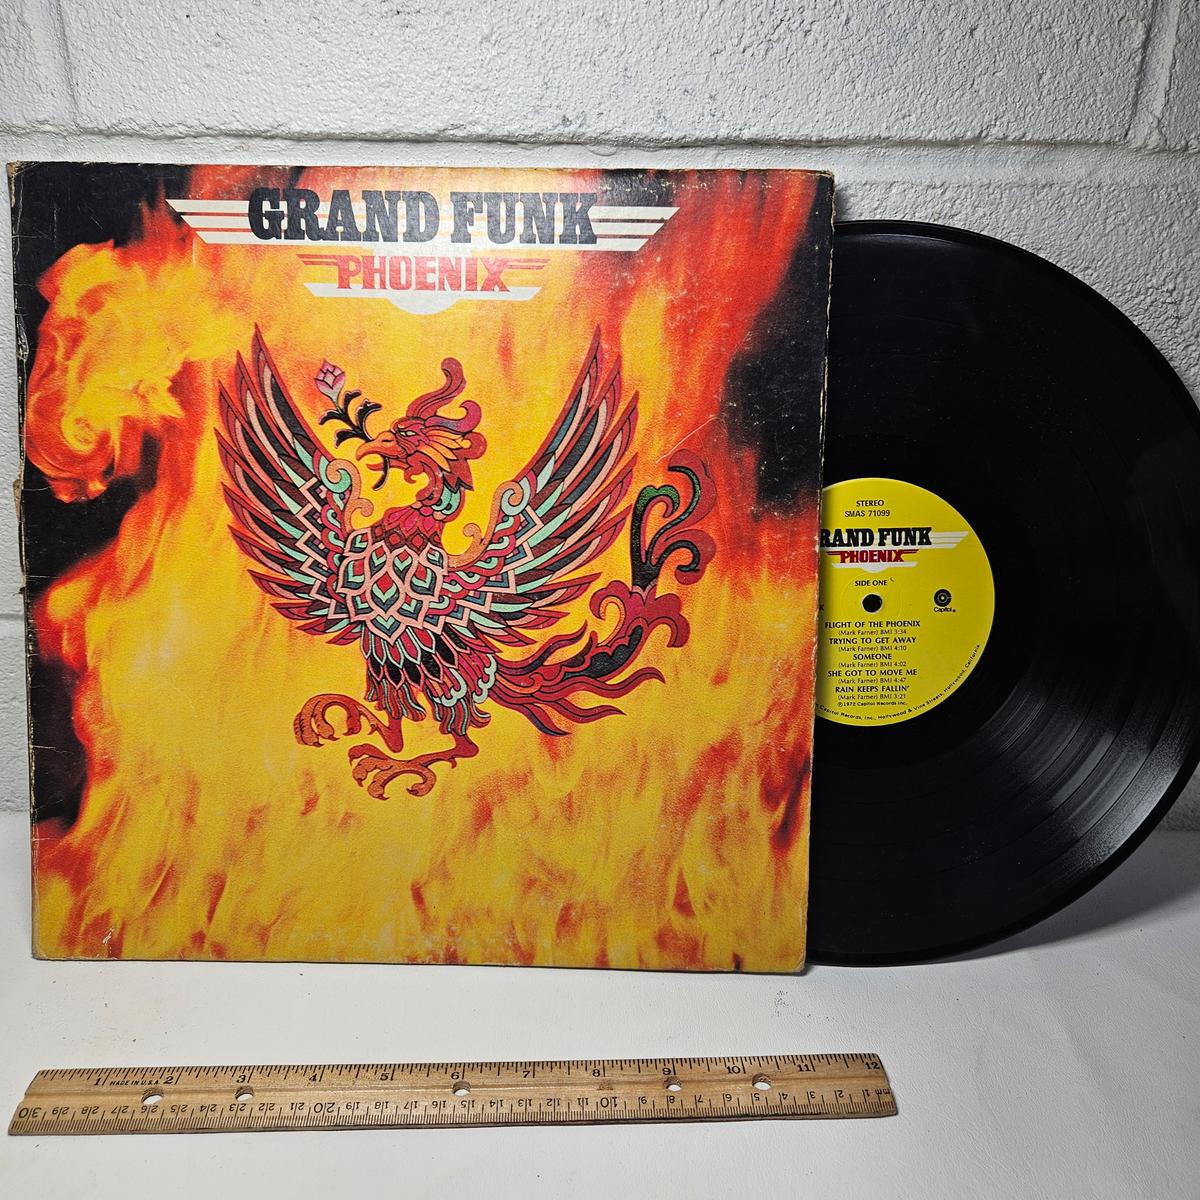 Vintage Vinyl Record Album, Grand Funk “Phoenix”